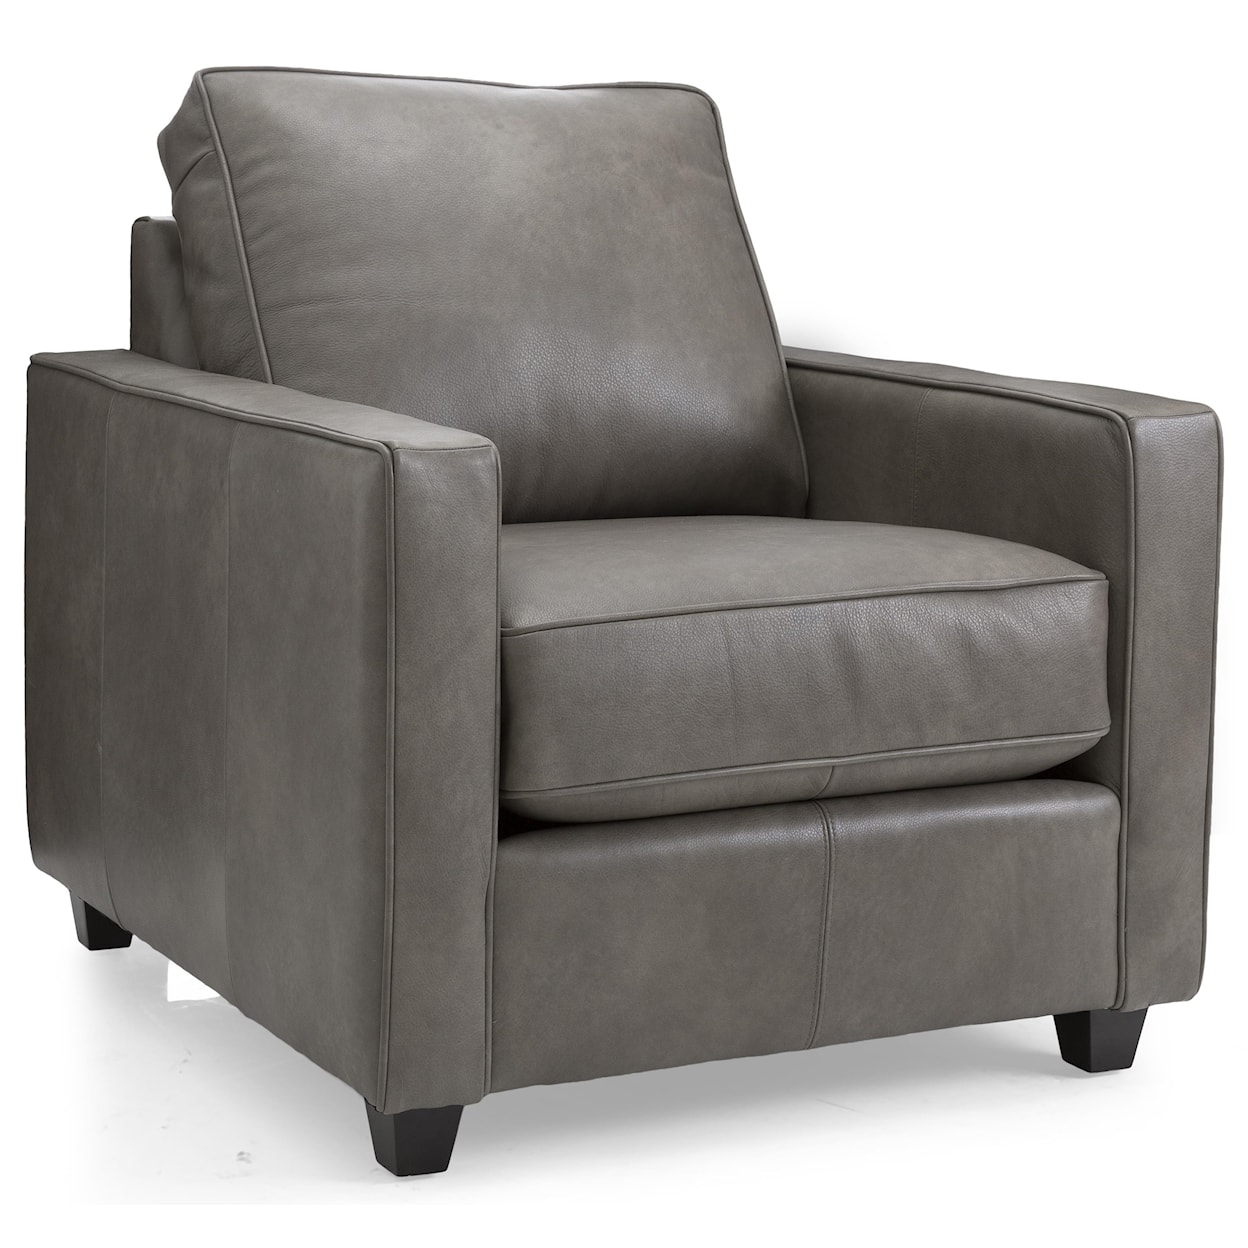 Taelor Designs Lara Leather Chair